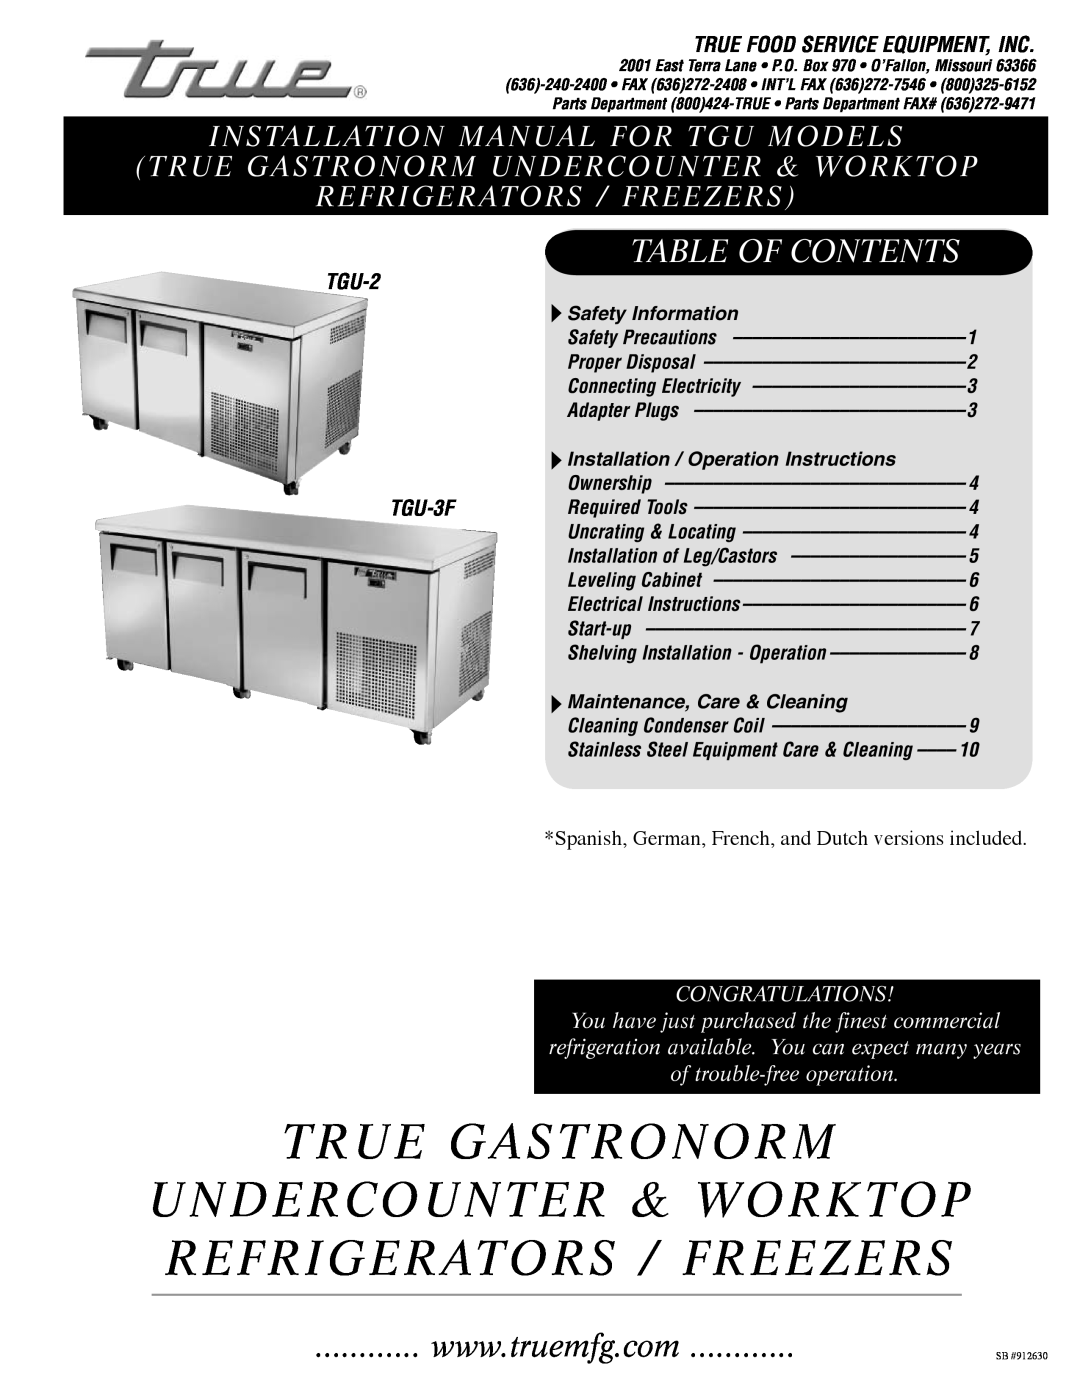 True Manufacturing Company TGU-2 installation manual True Gastronorm Undercounter & Worktop Refrigerators / Freezers 